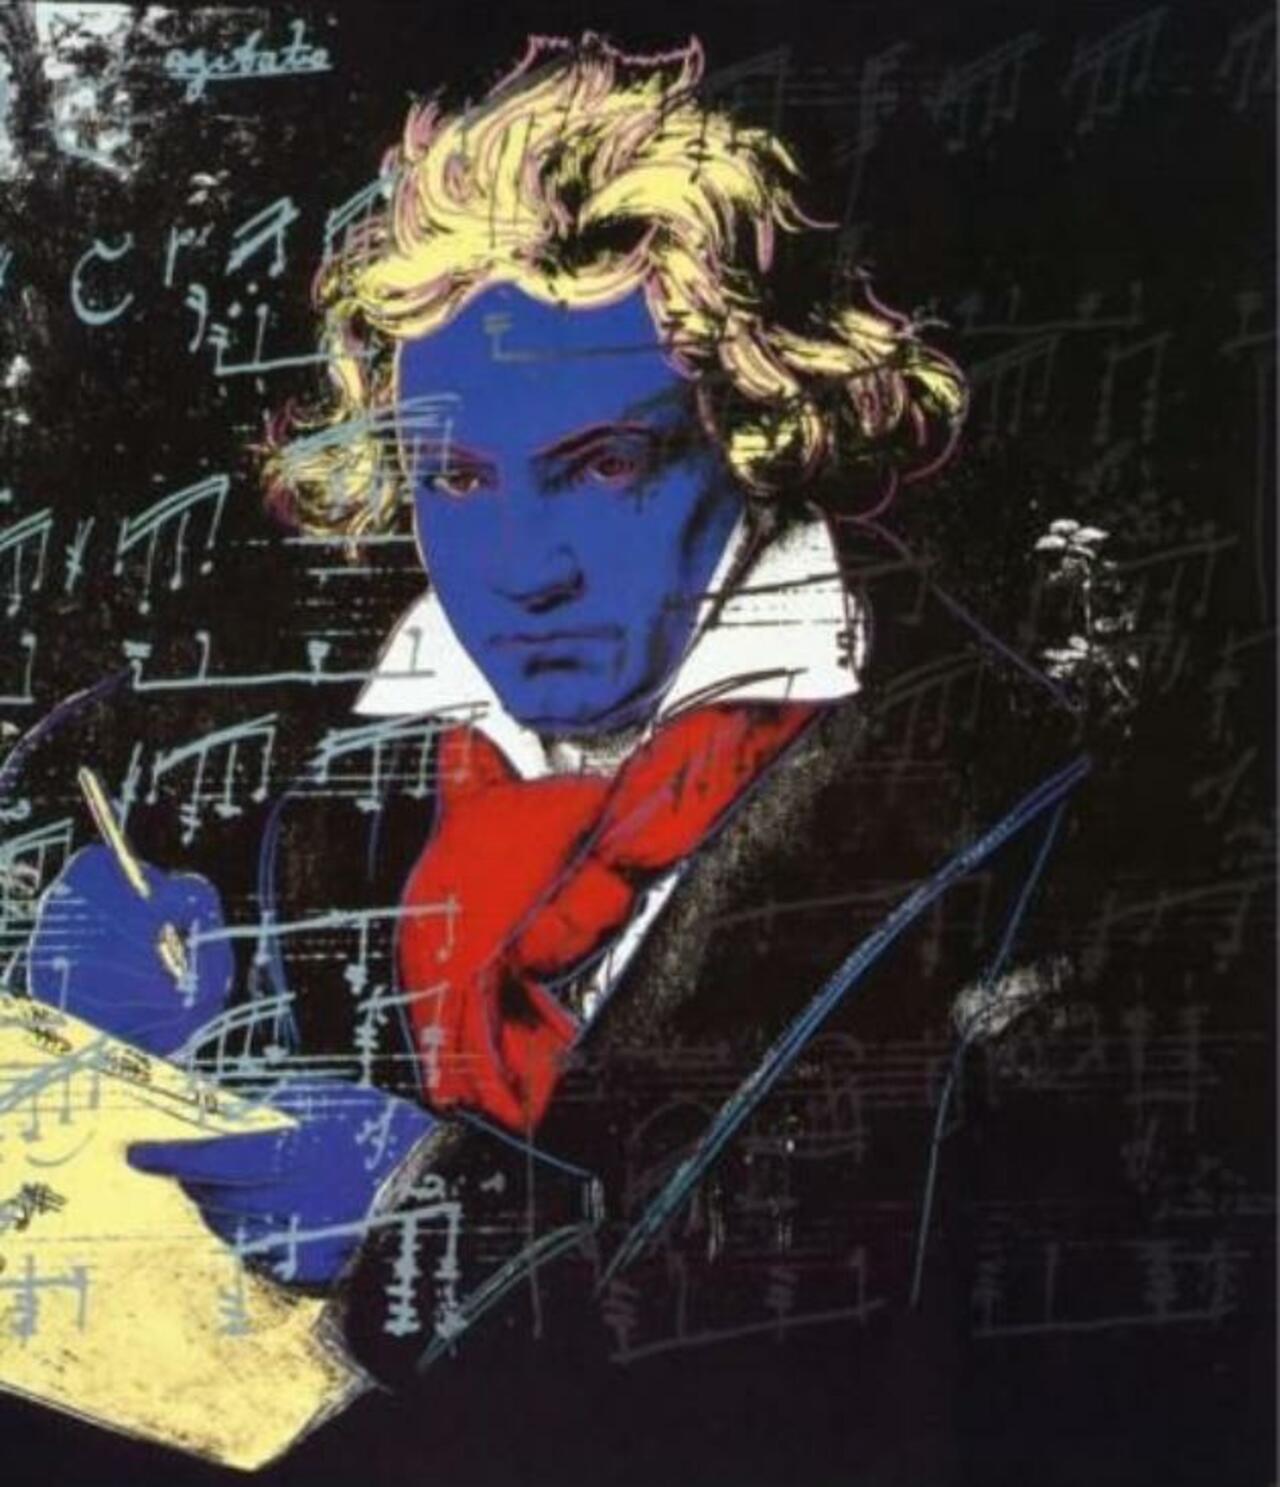 RT manutitti18: Beethoven (blu face) by Andy #Warhol
#art #popart http://t.co/zIfiiRR5bc http://ift.tt/1vYv1rt